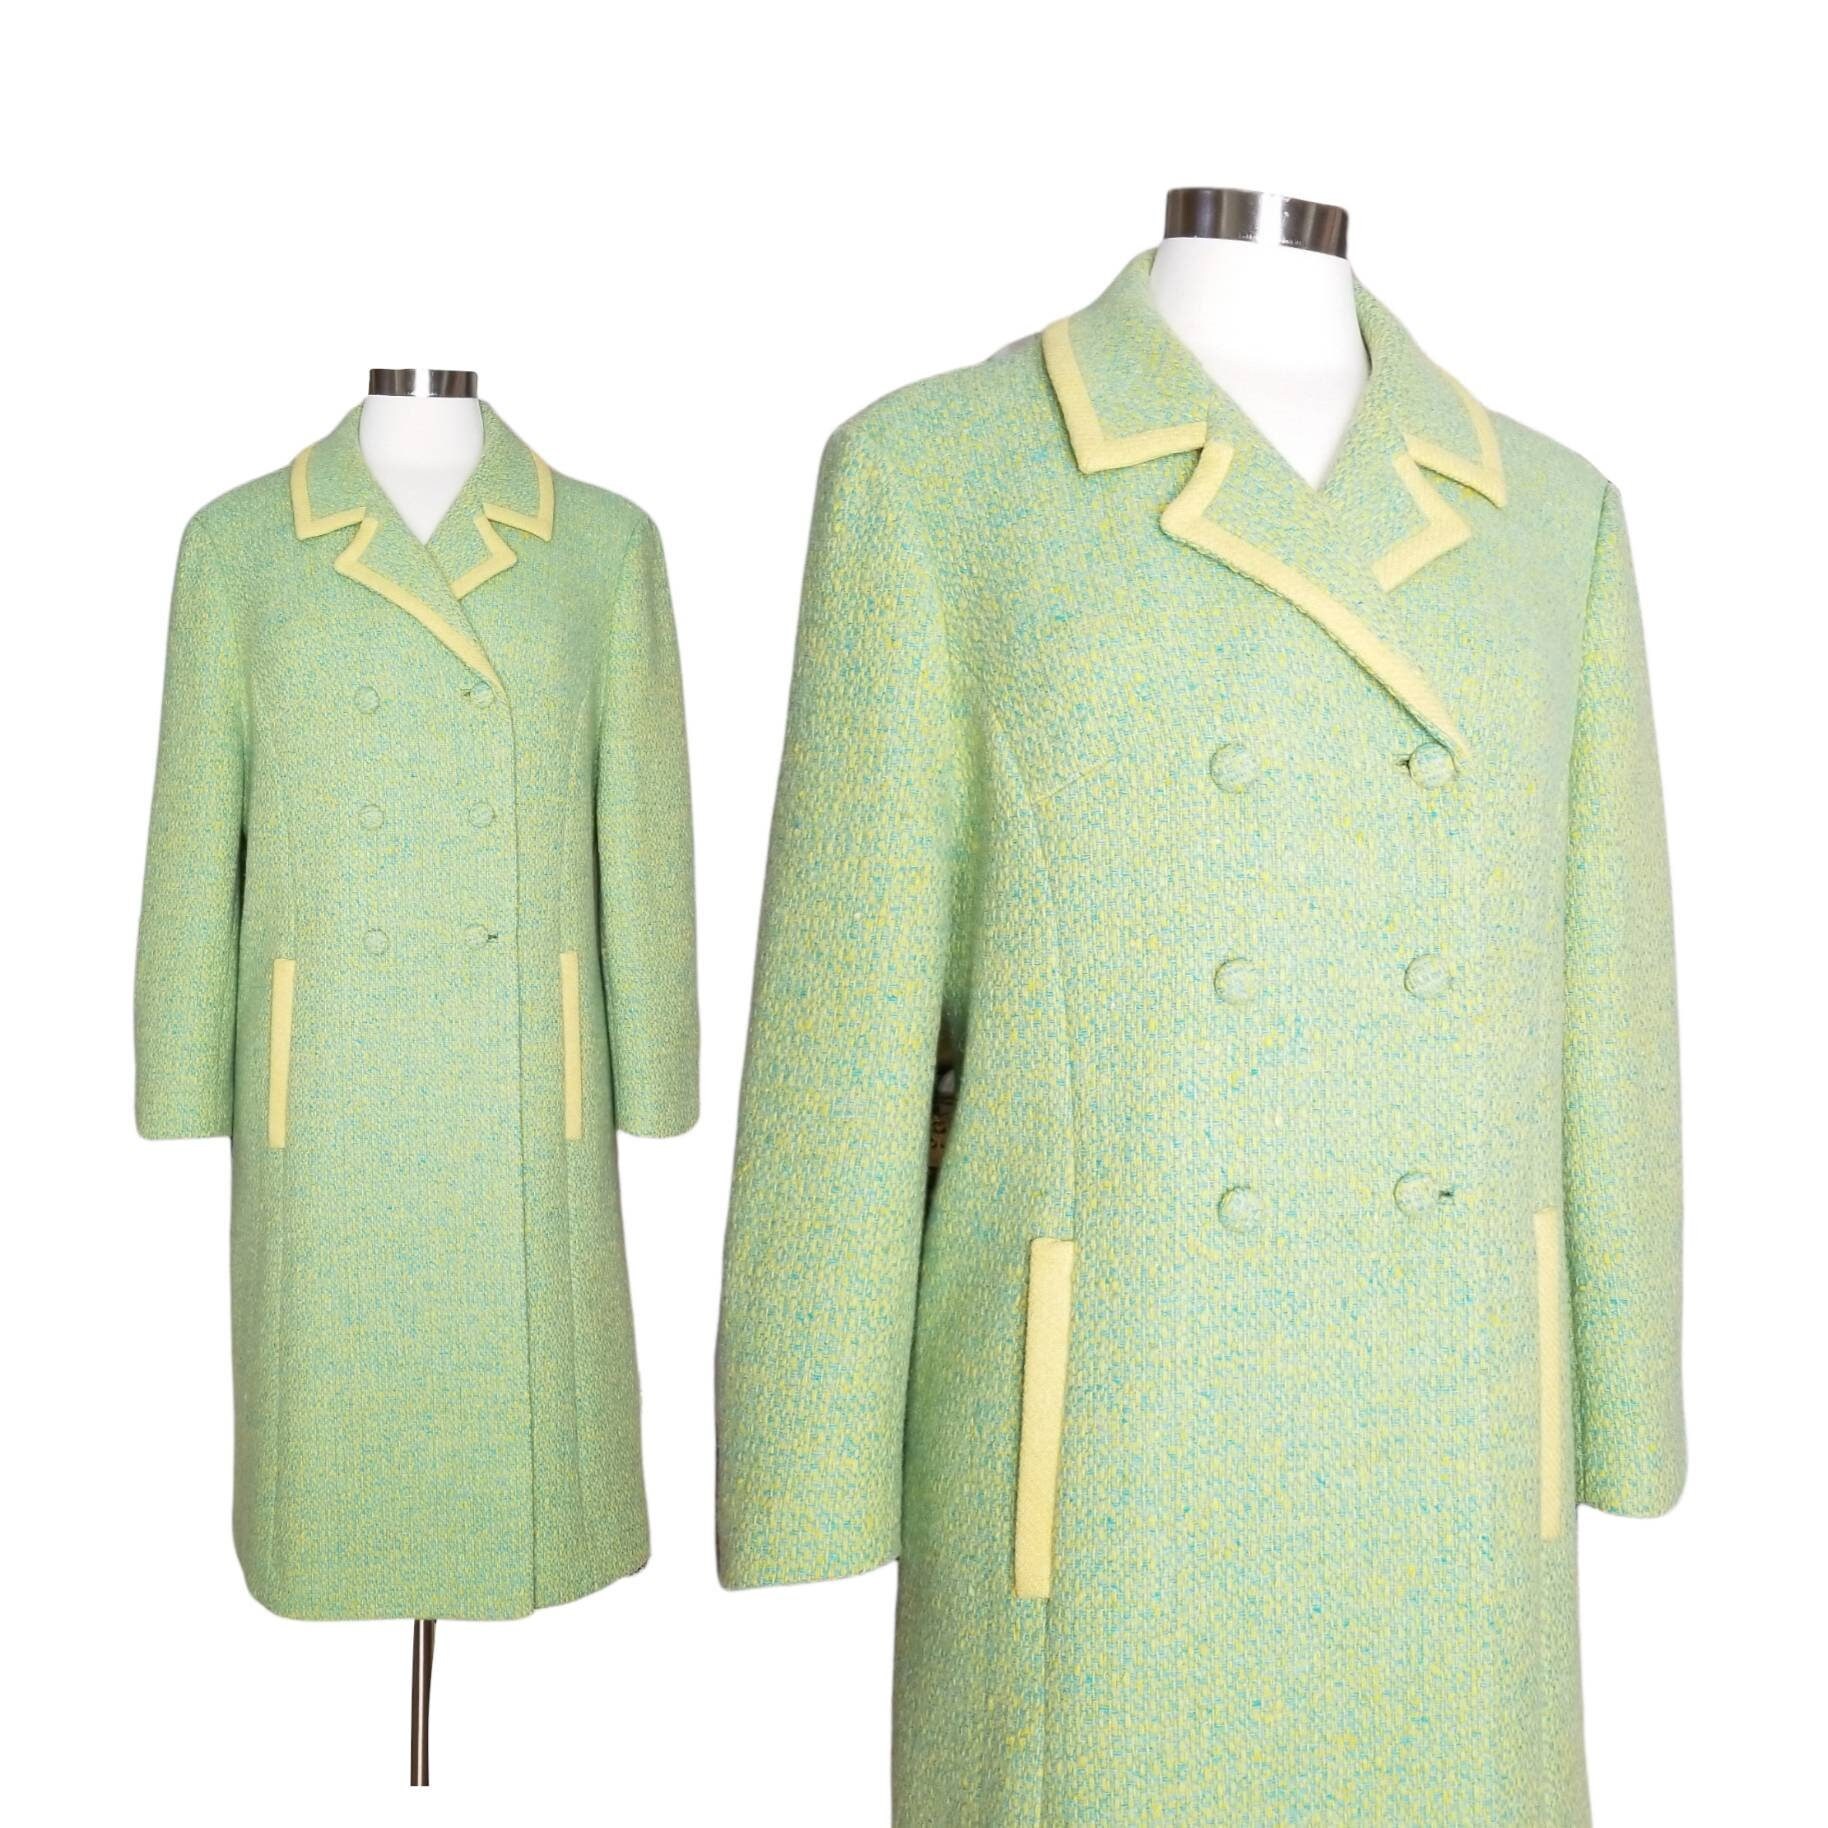 Vintage Tweed Coat Medium / Green and Yellow Wool Coat / 